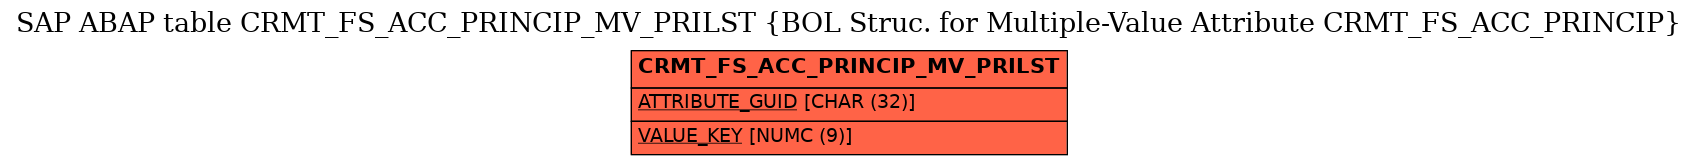 E-R Diagram for table CRMT_FS_ACC_PRINCIP_MV_PRILST (BOL Struc. for Multiple-Value Attribute CRMT_FS_ACC_PRINCIP)